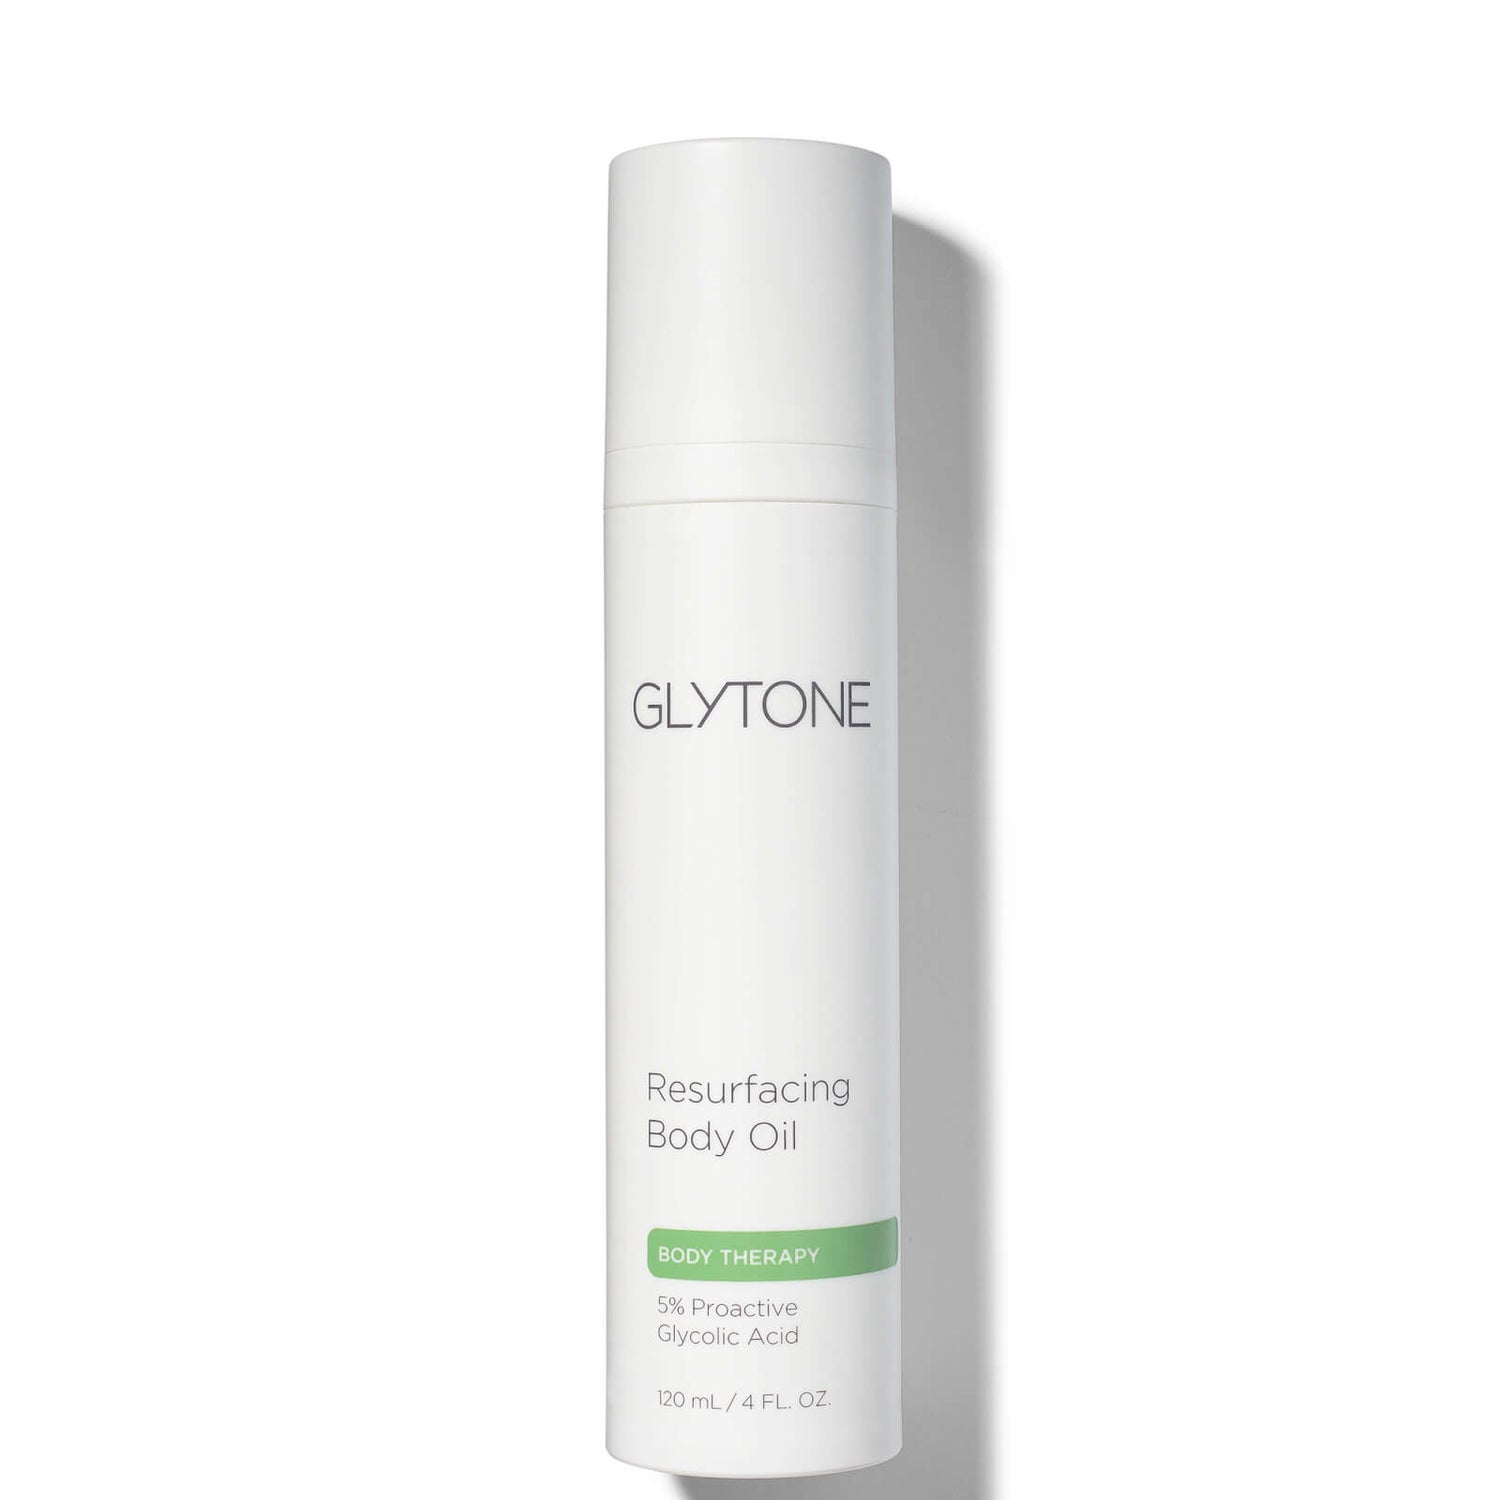 Glytone Resurfacing Body Oil 4.2 fl. oz